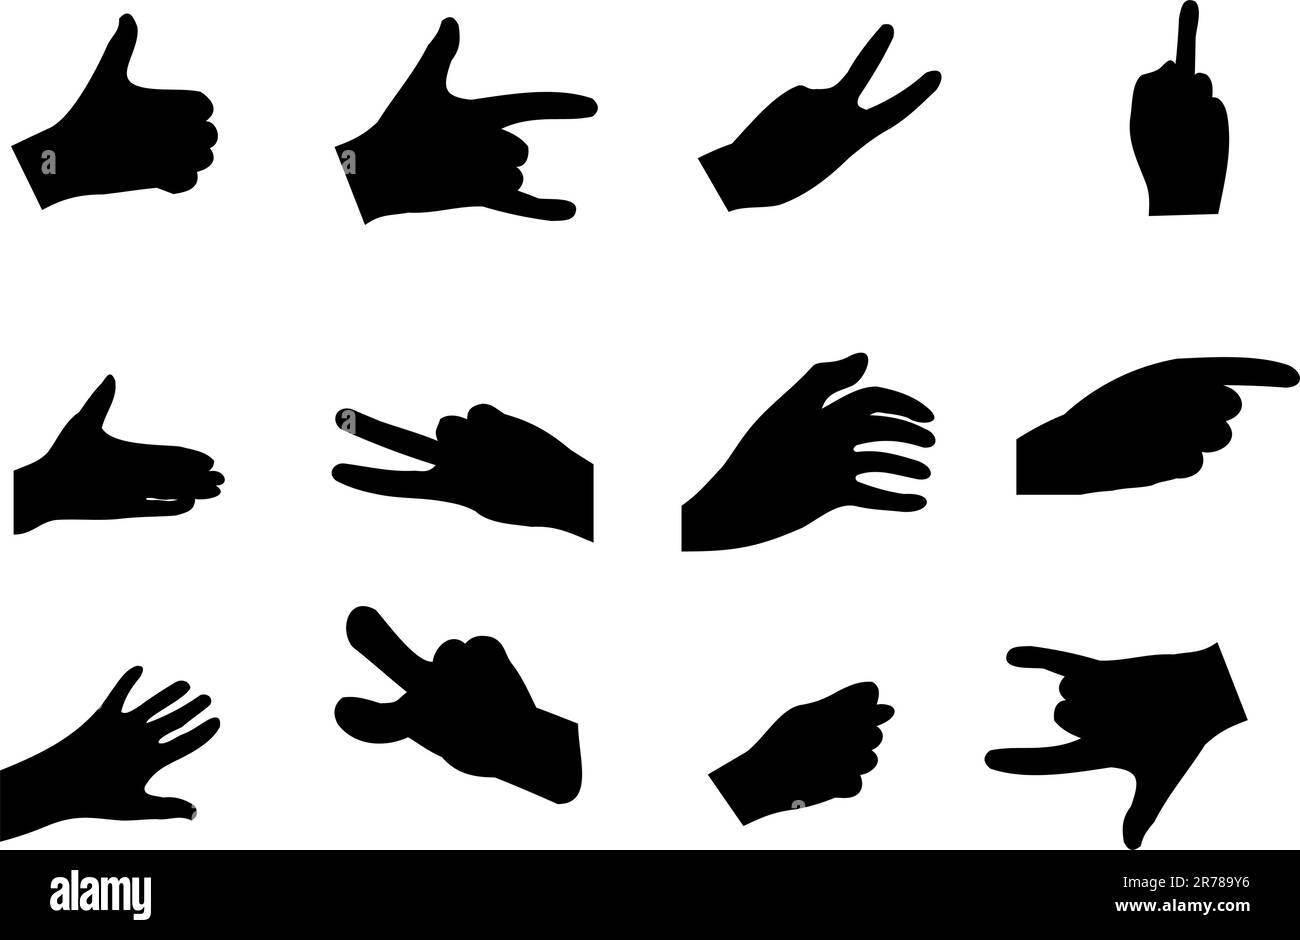 Human hands. A set of hands. Signs and symbols Stock Vector